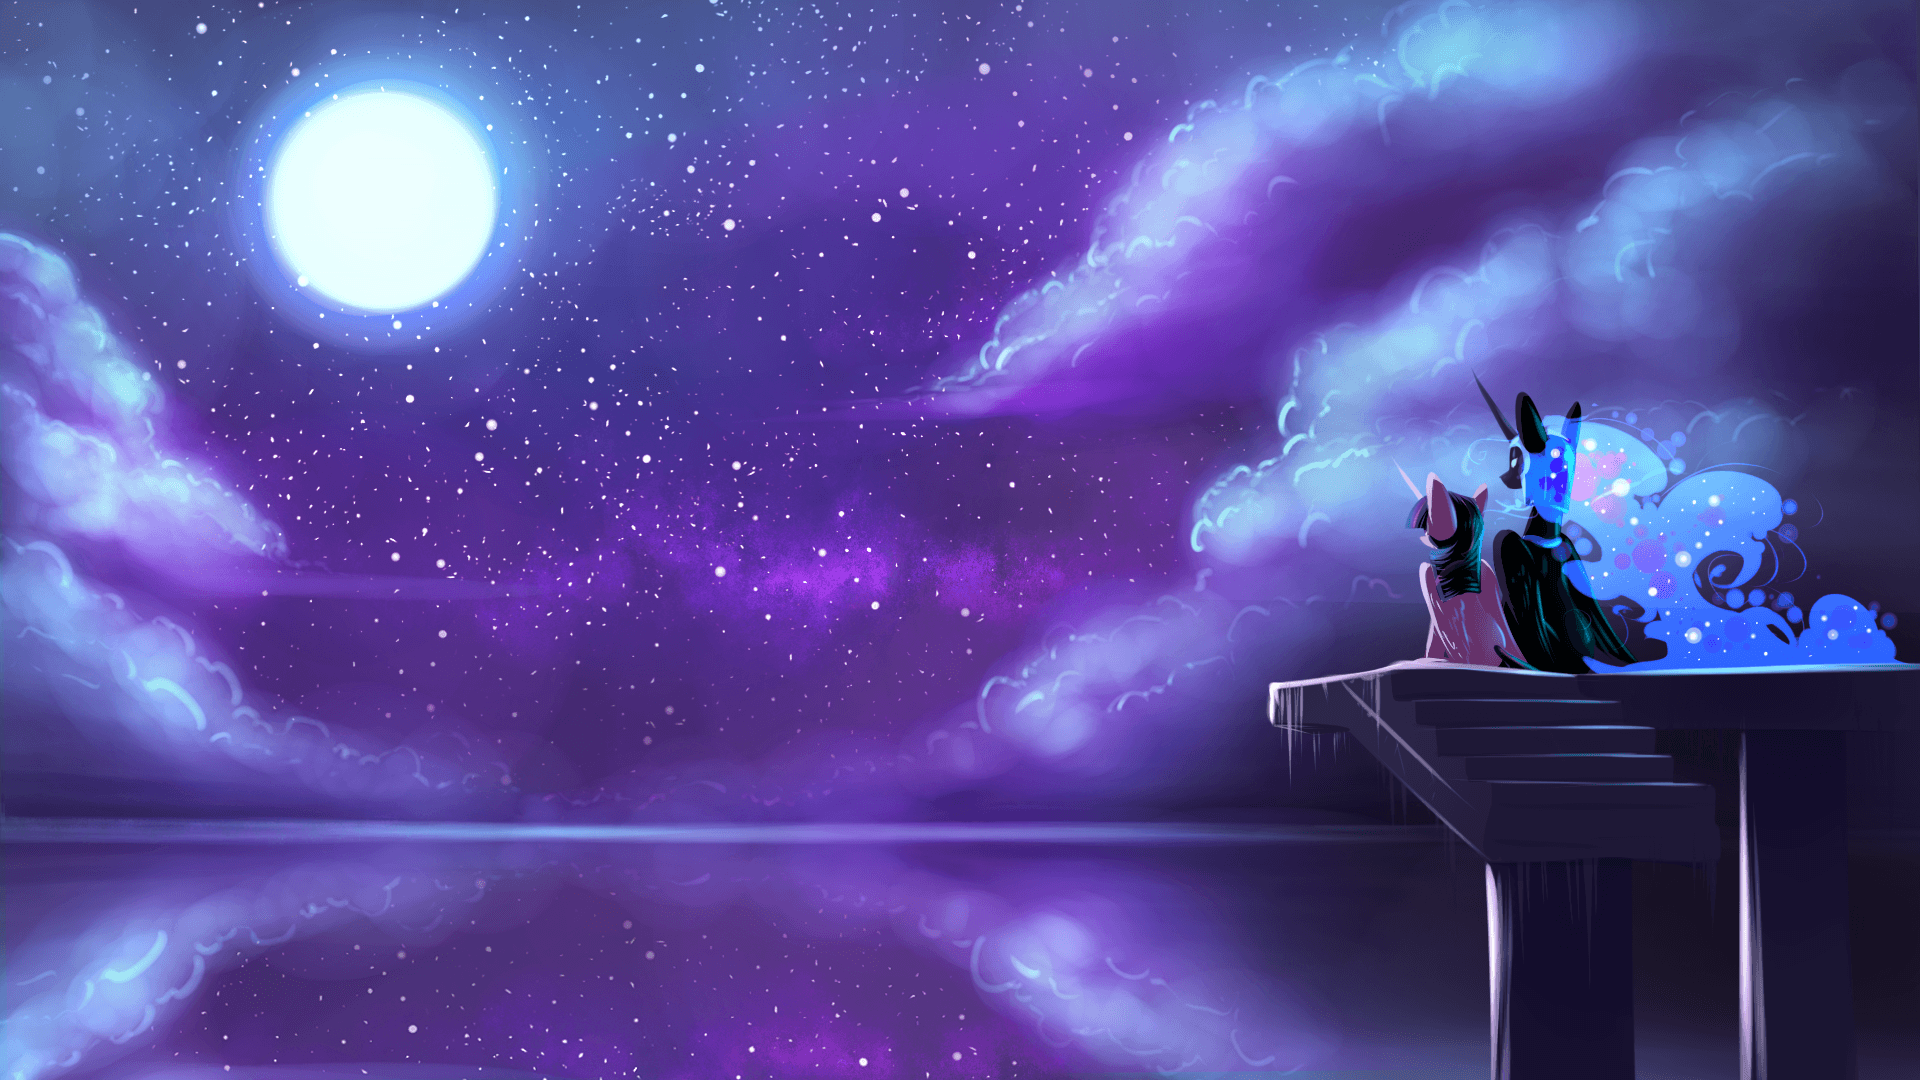 Princess Luna and Twilight Sparkle Wallpaper